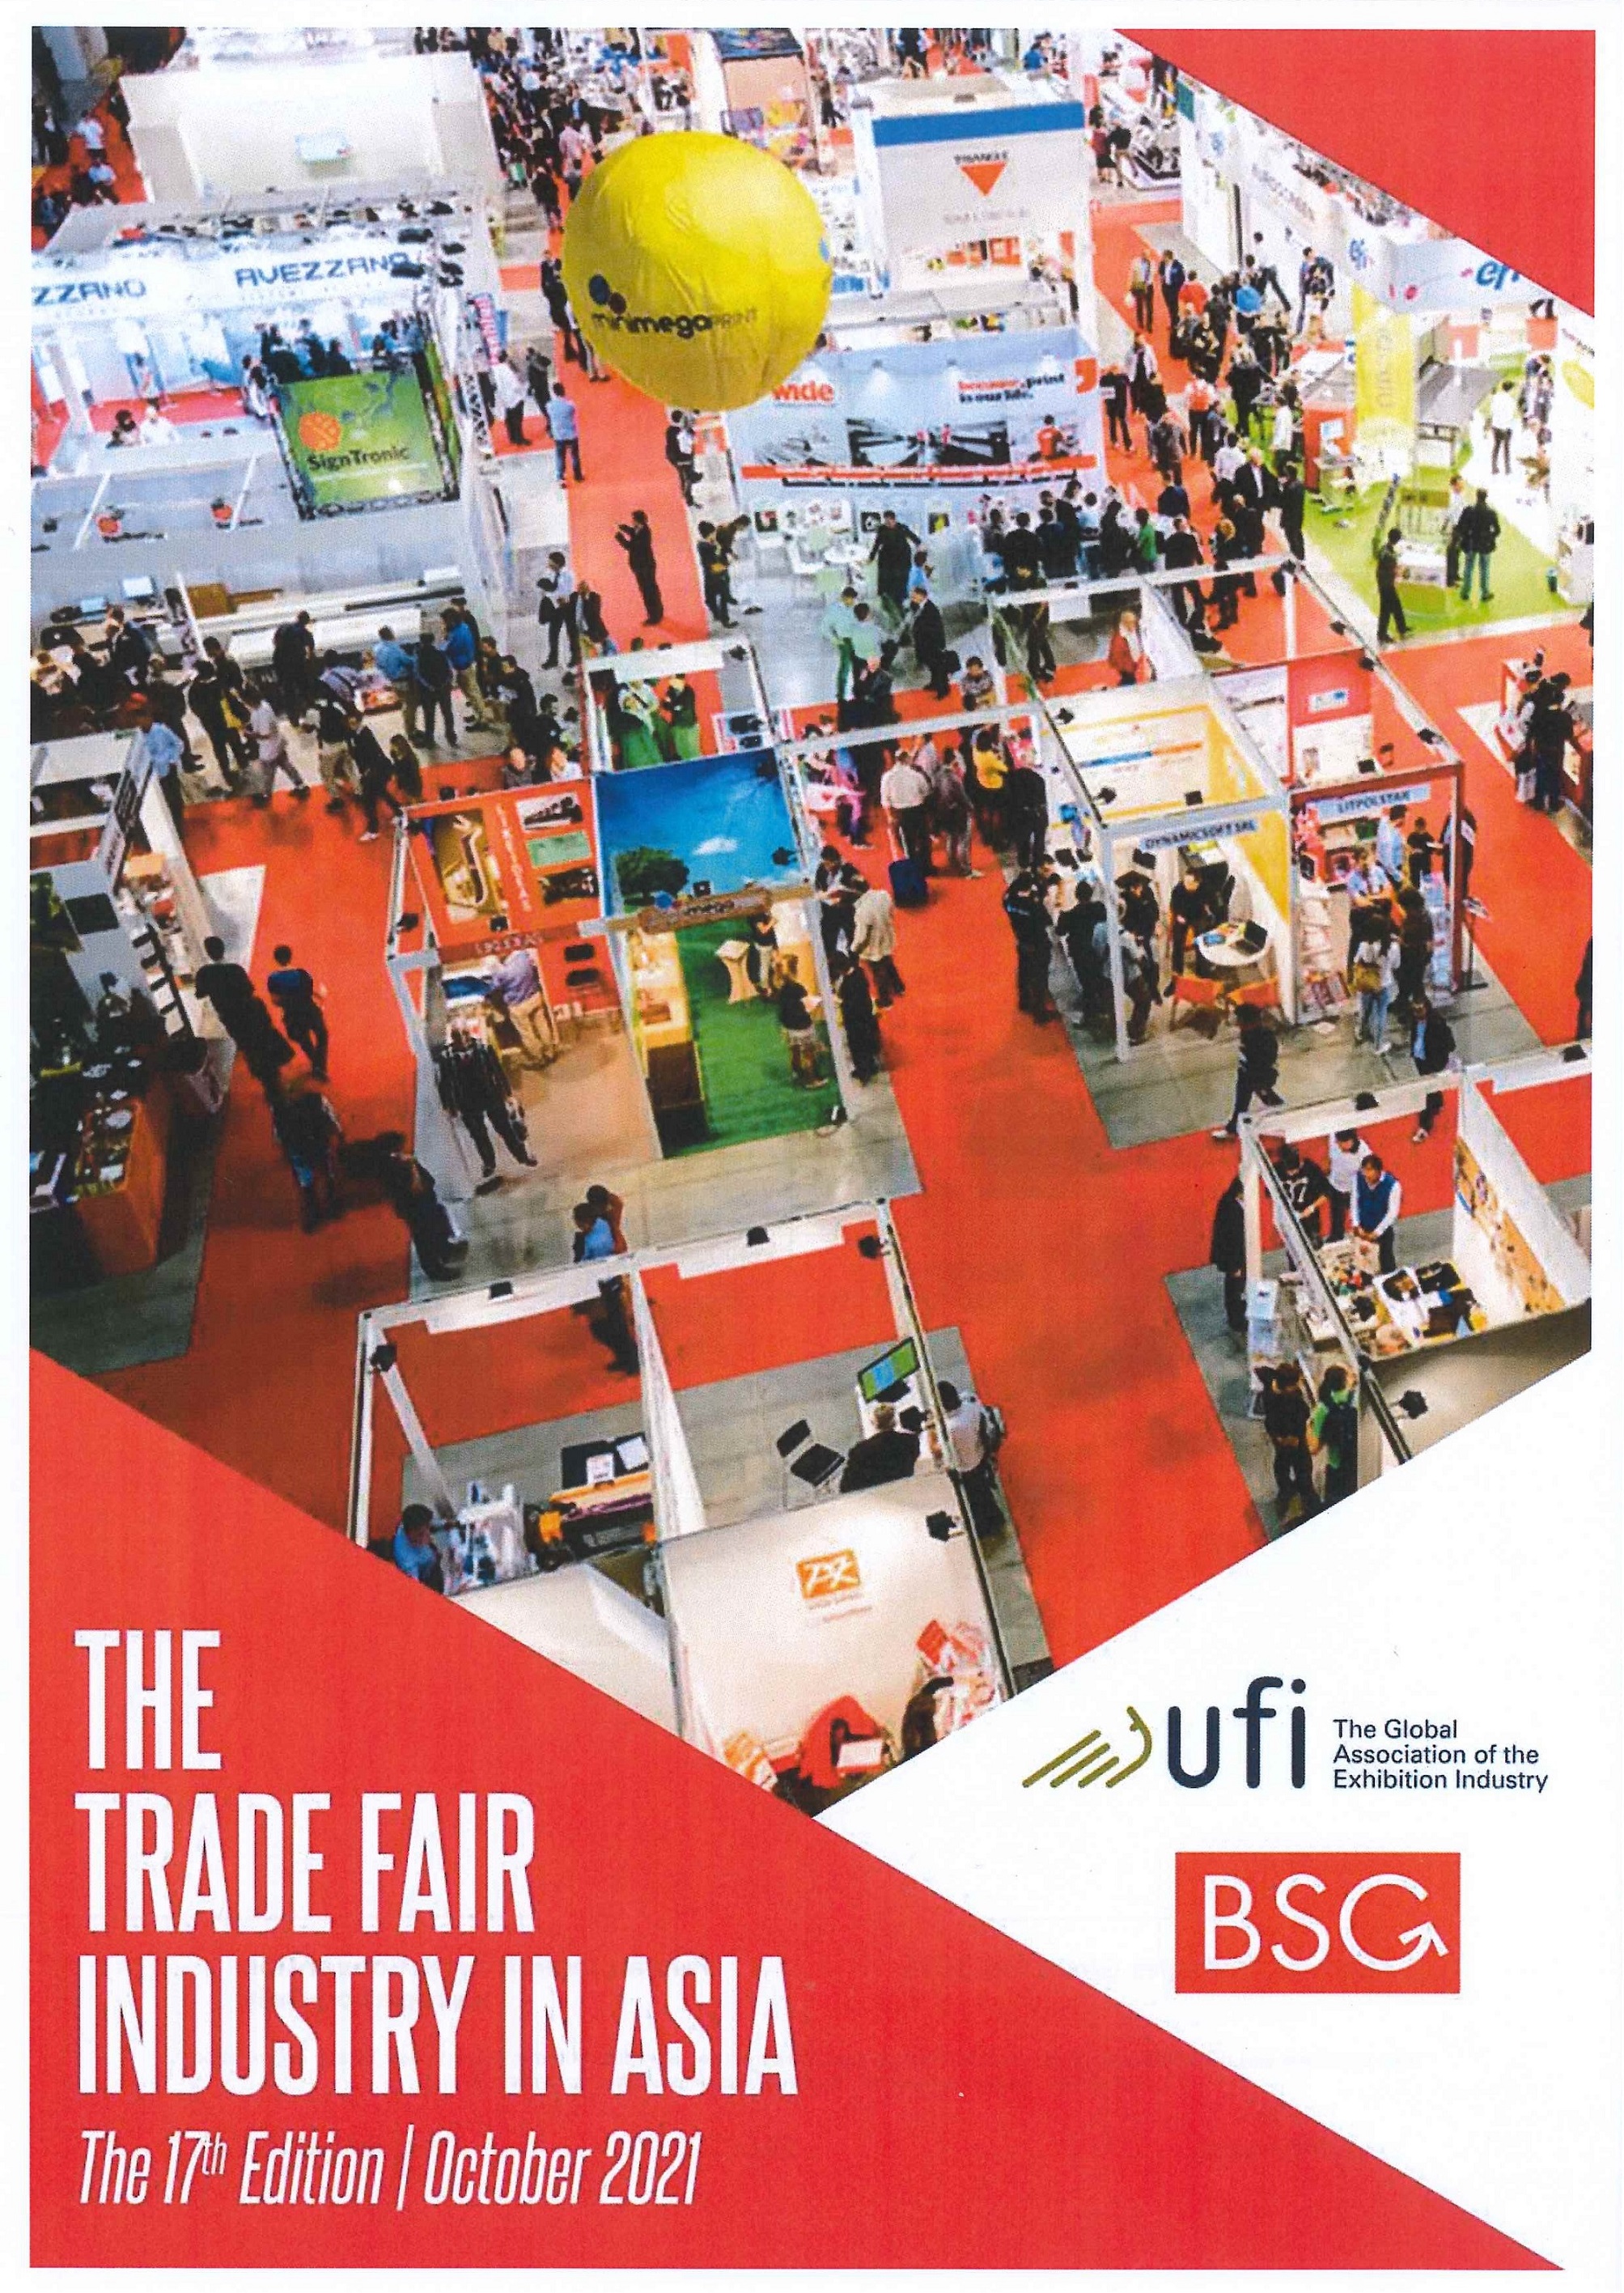 The trade fair industry in Asia [e-book]